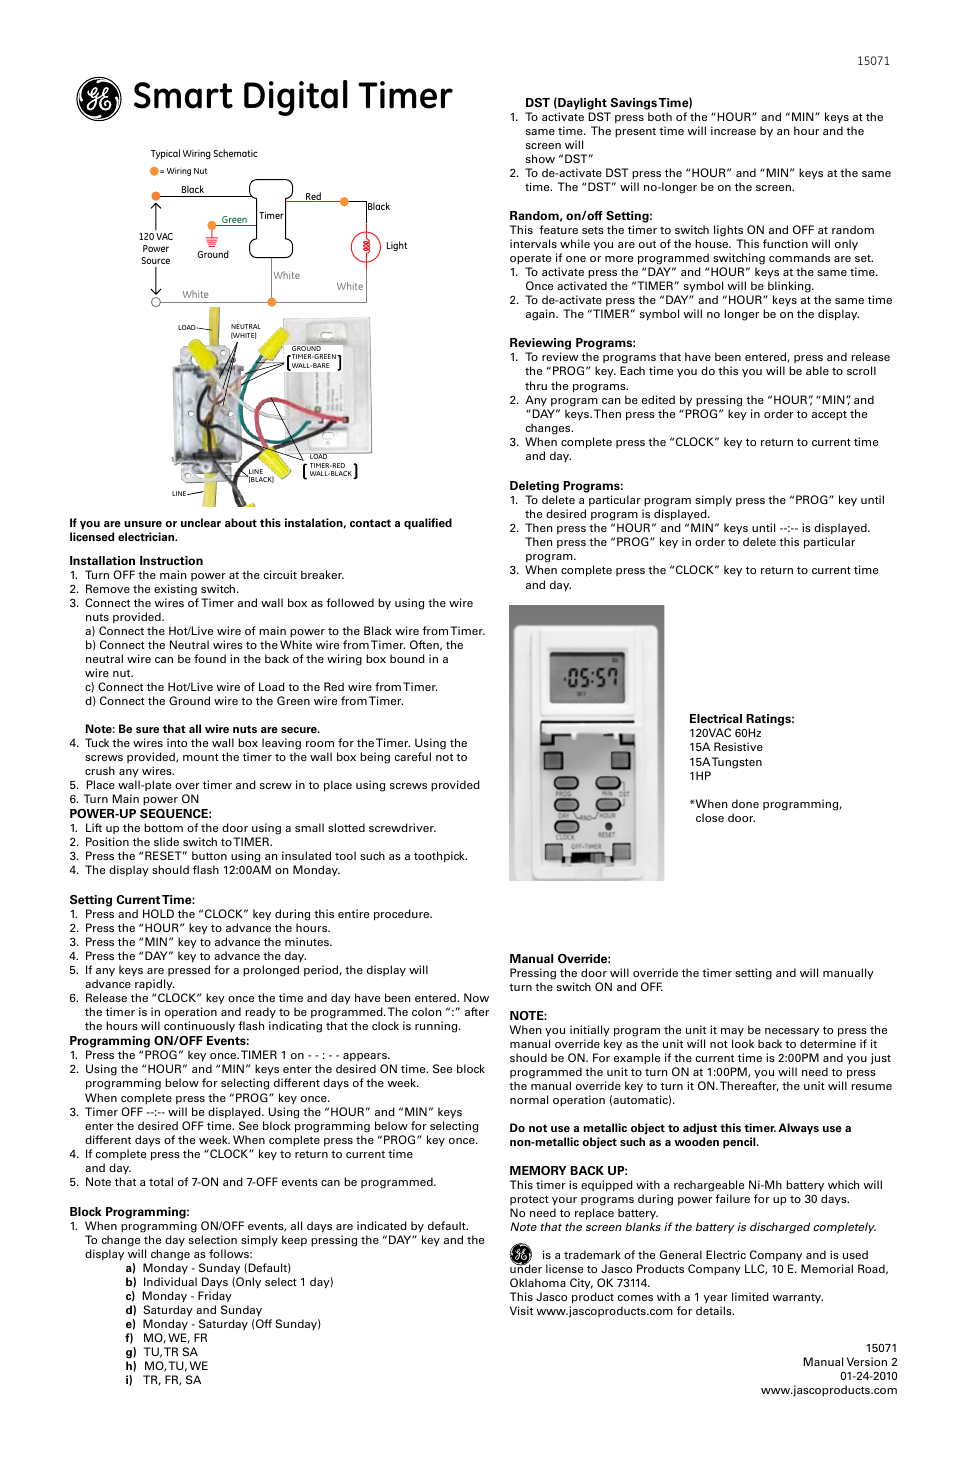 GE In-Wall 15071 GE Smart Digital Timer User Manual | 1 page